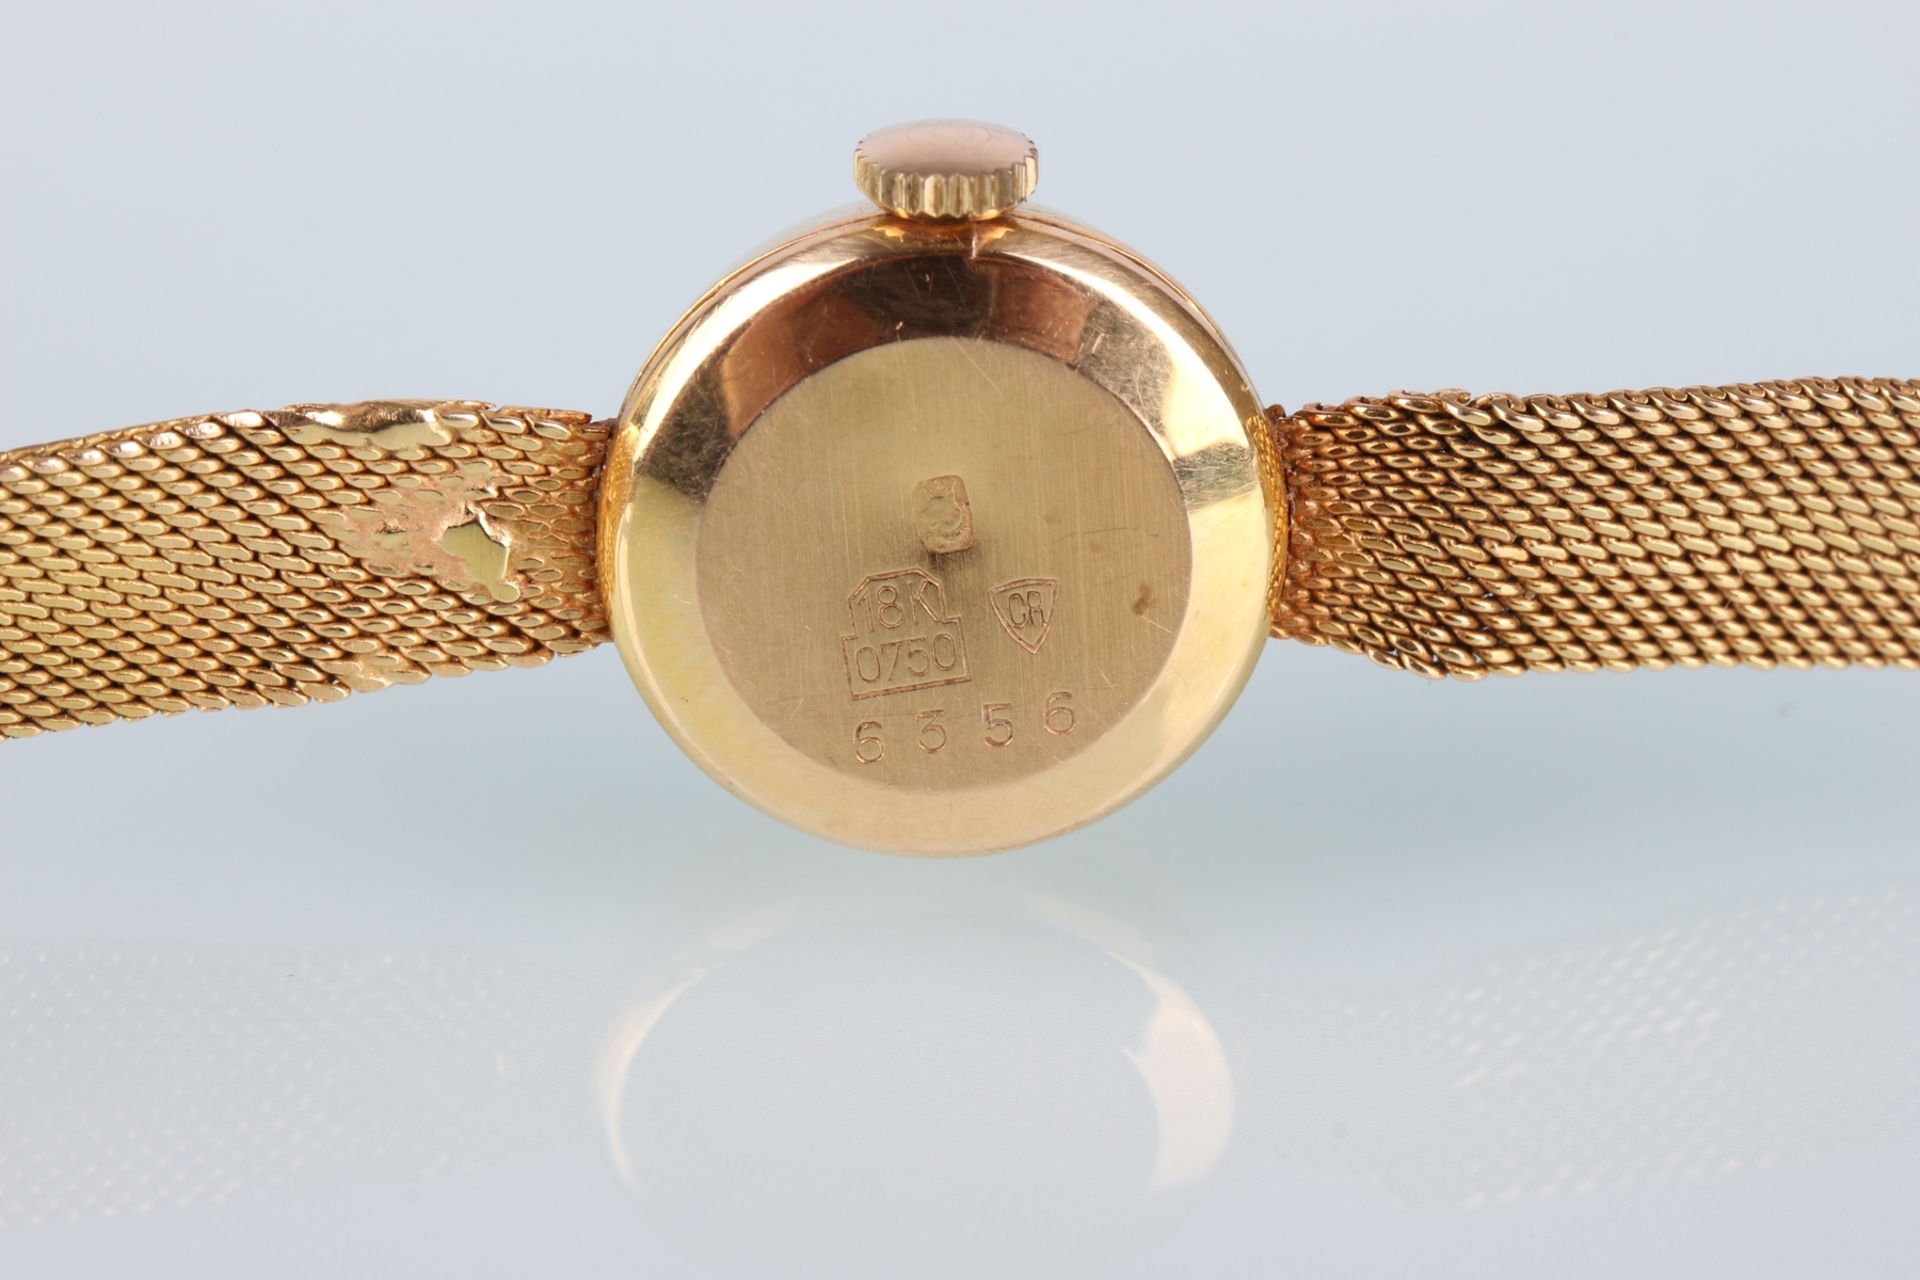 750 Gold Cornavin Geneve Armbanduhr, 18K gold wristwatch, - Image 4 of 6